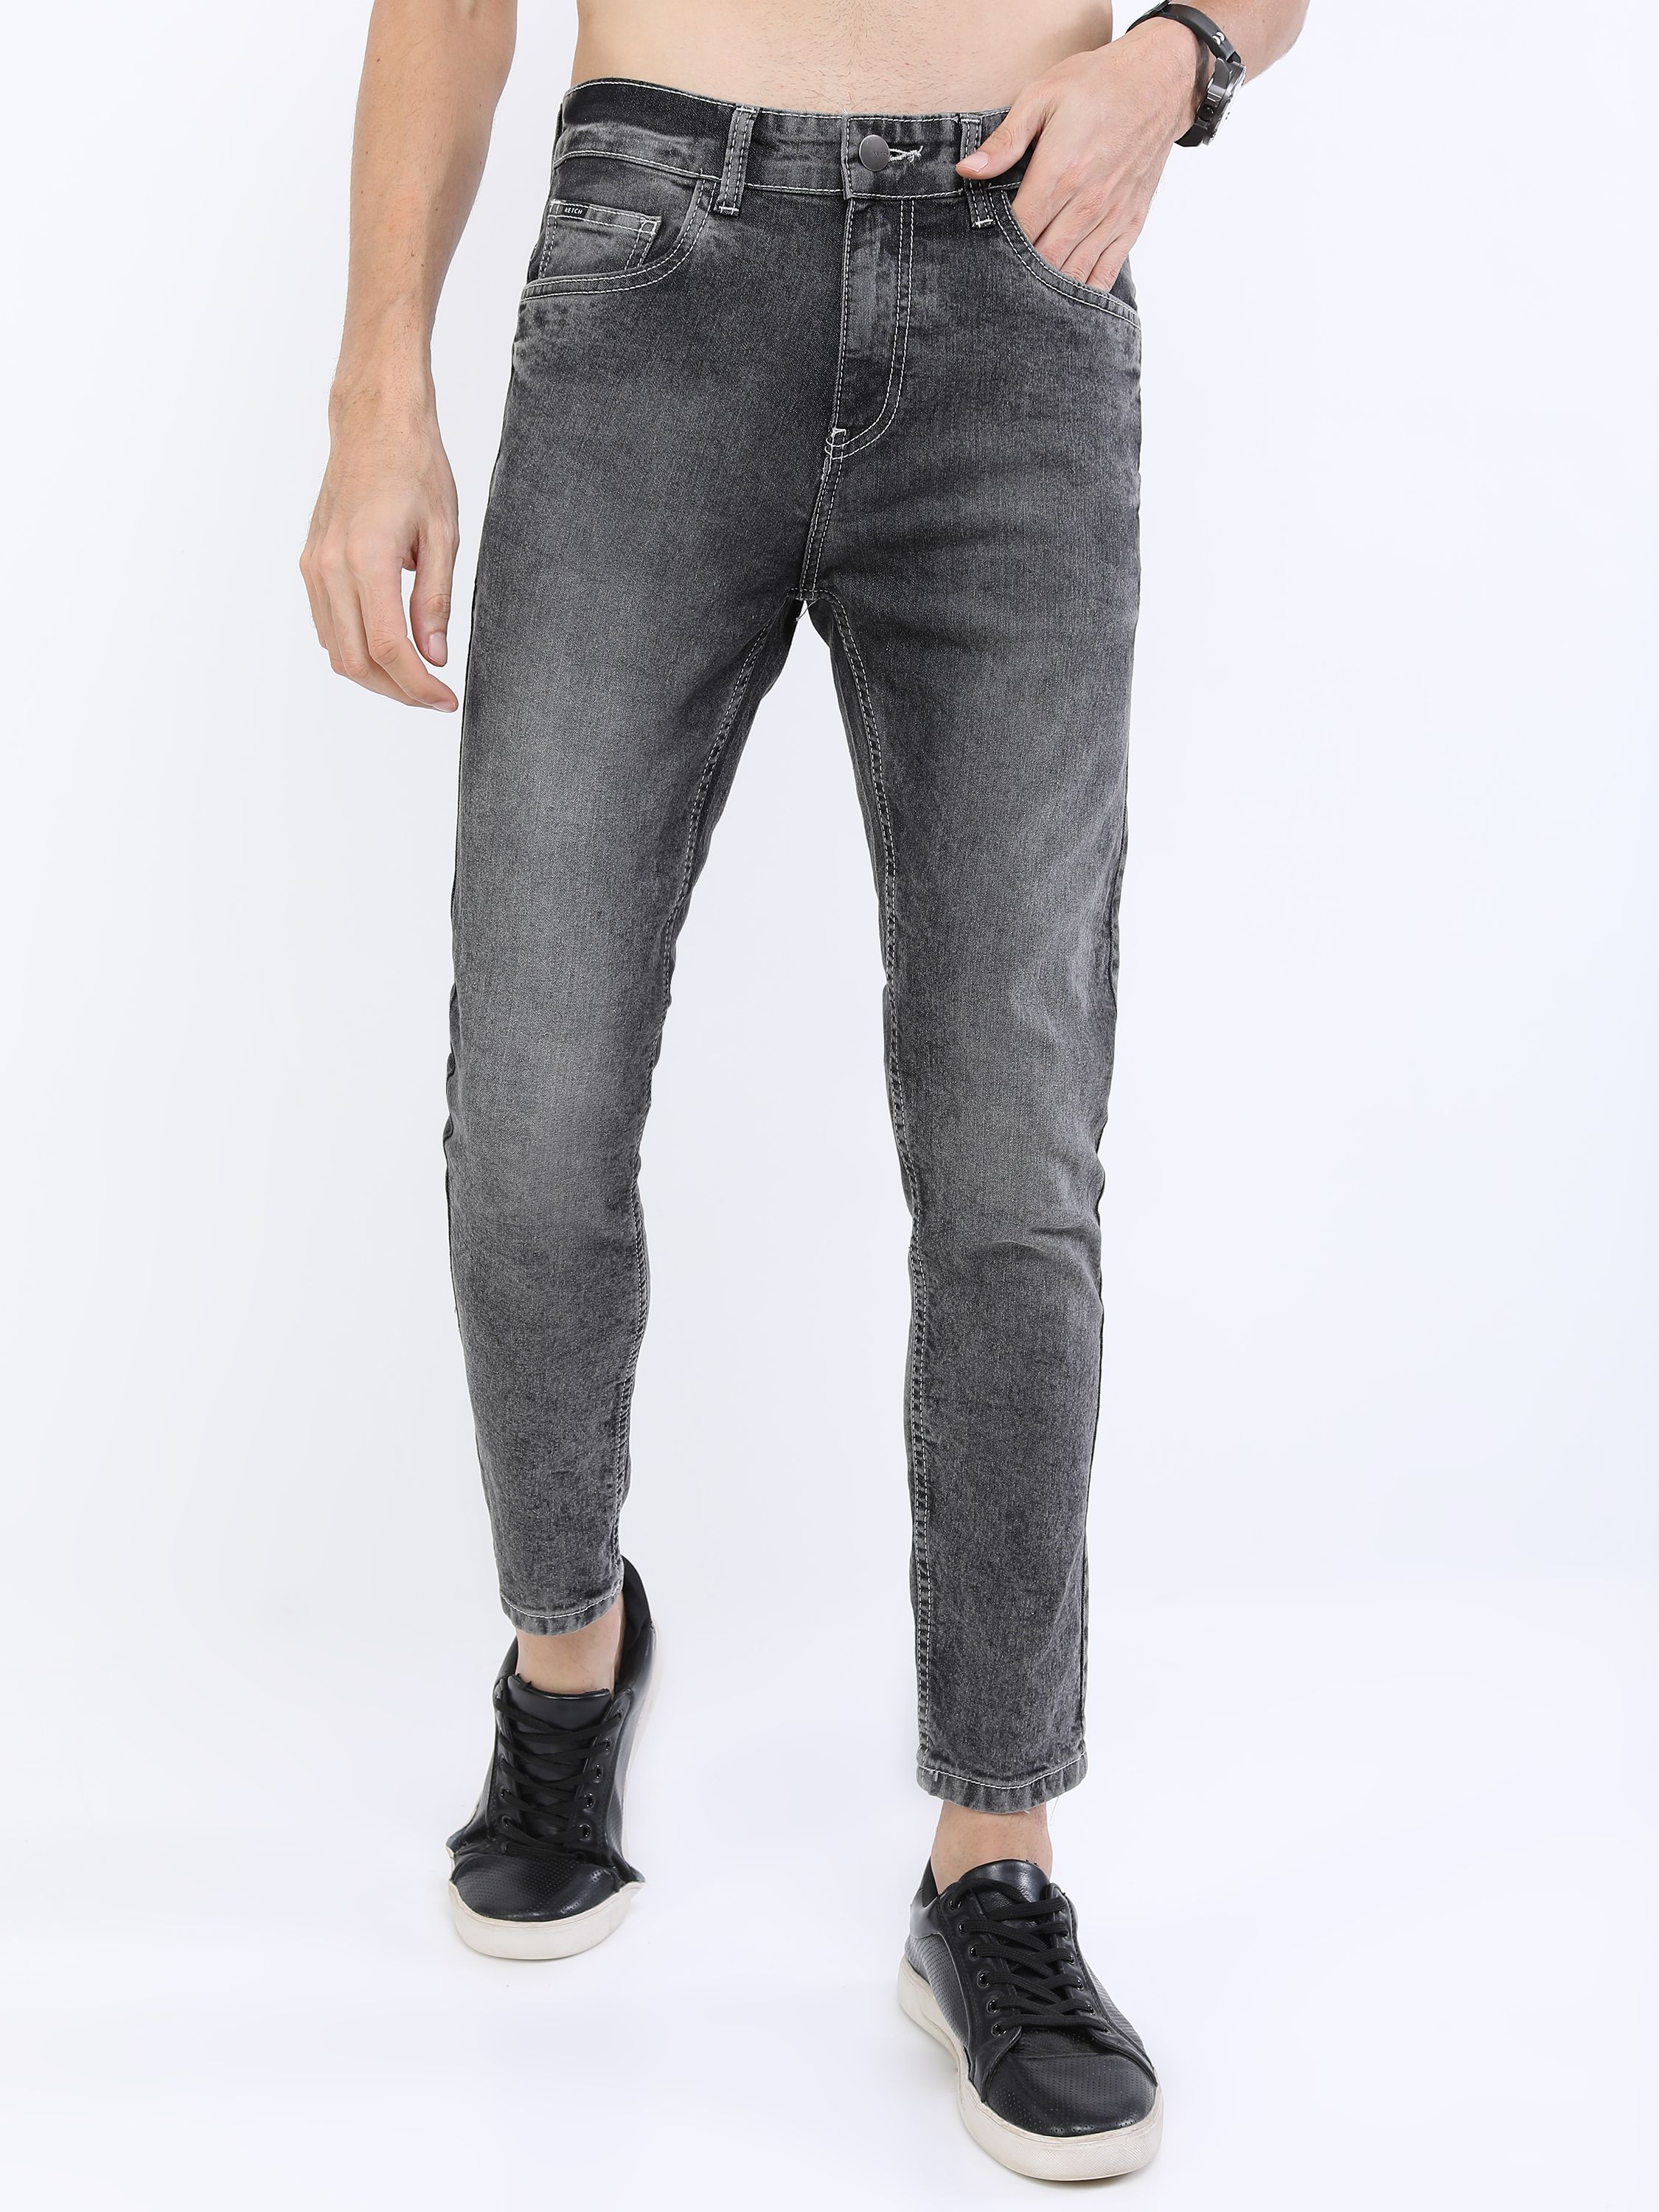     			Ketch Skinny Fit Basic Men's Jeans - Grey ( Pack of 1 )